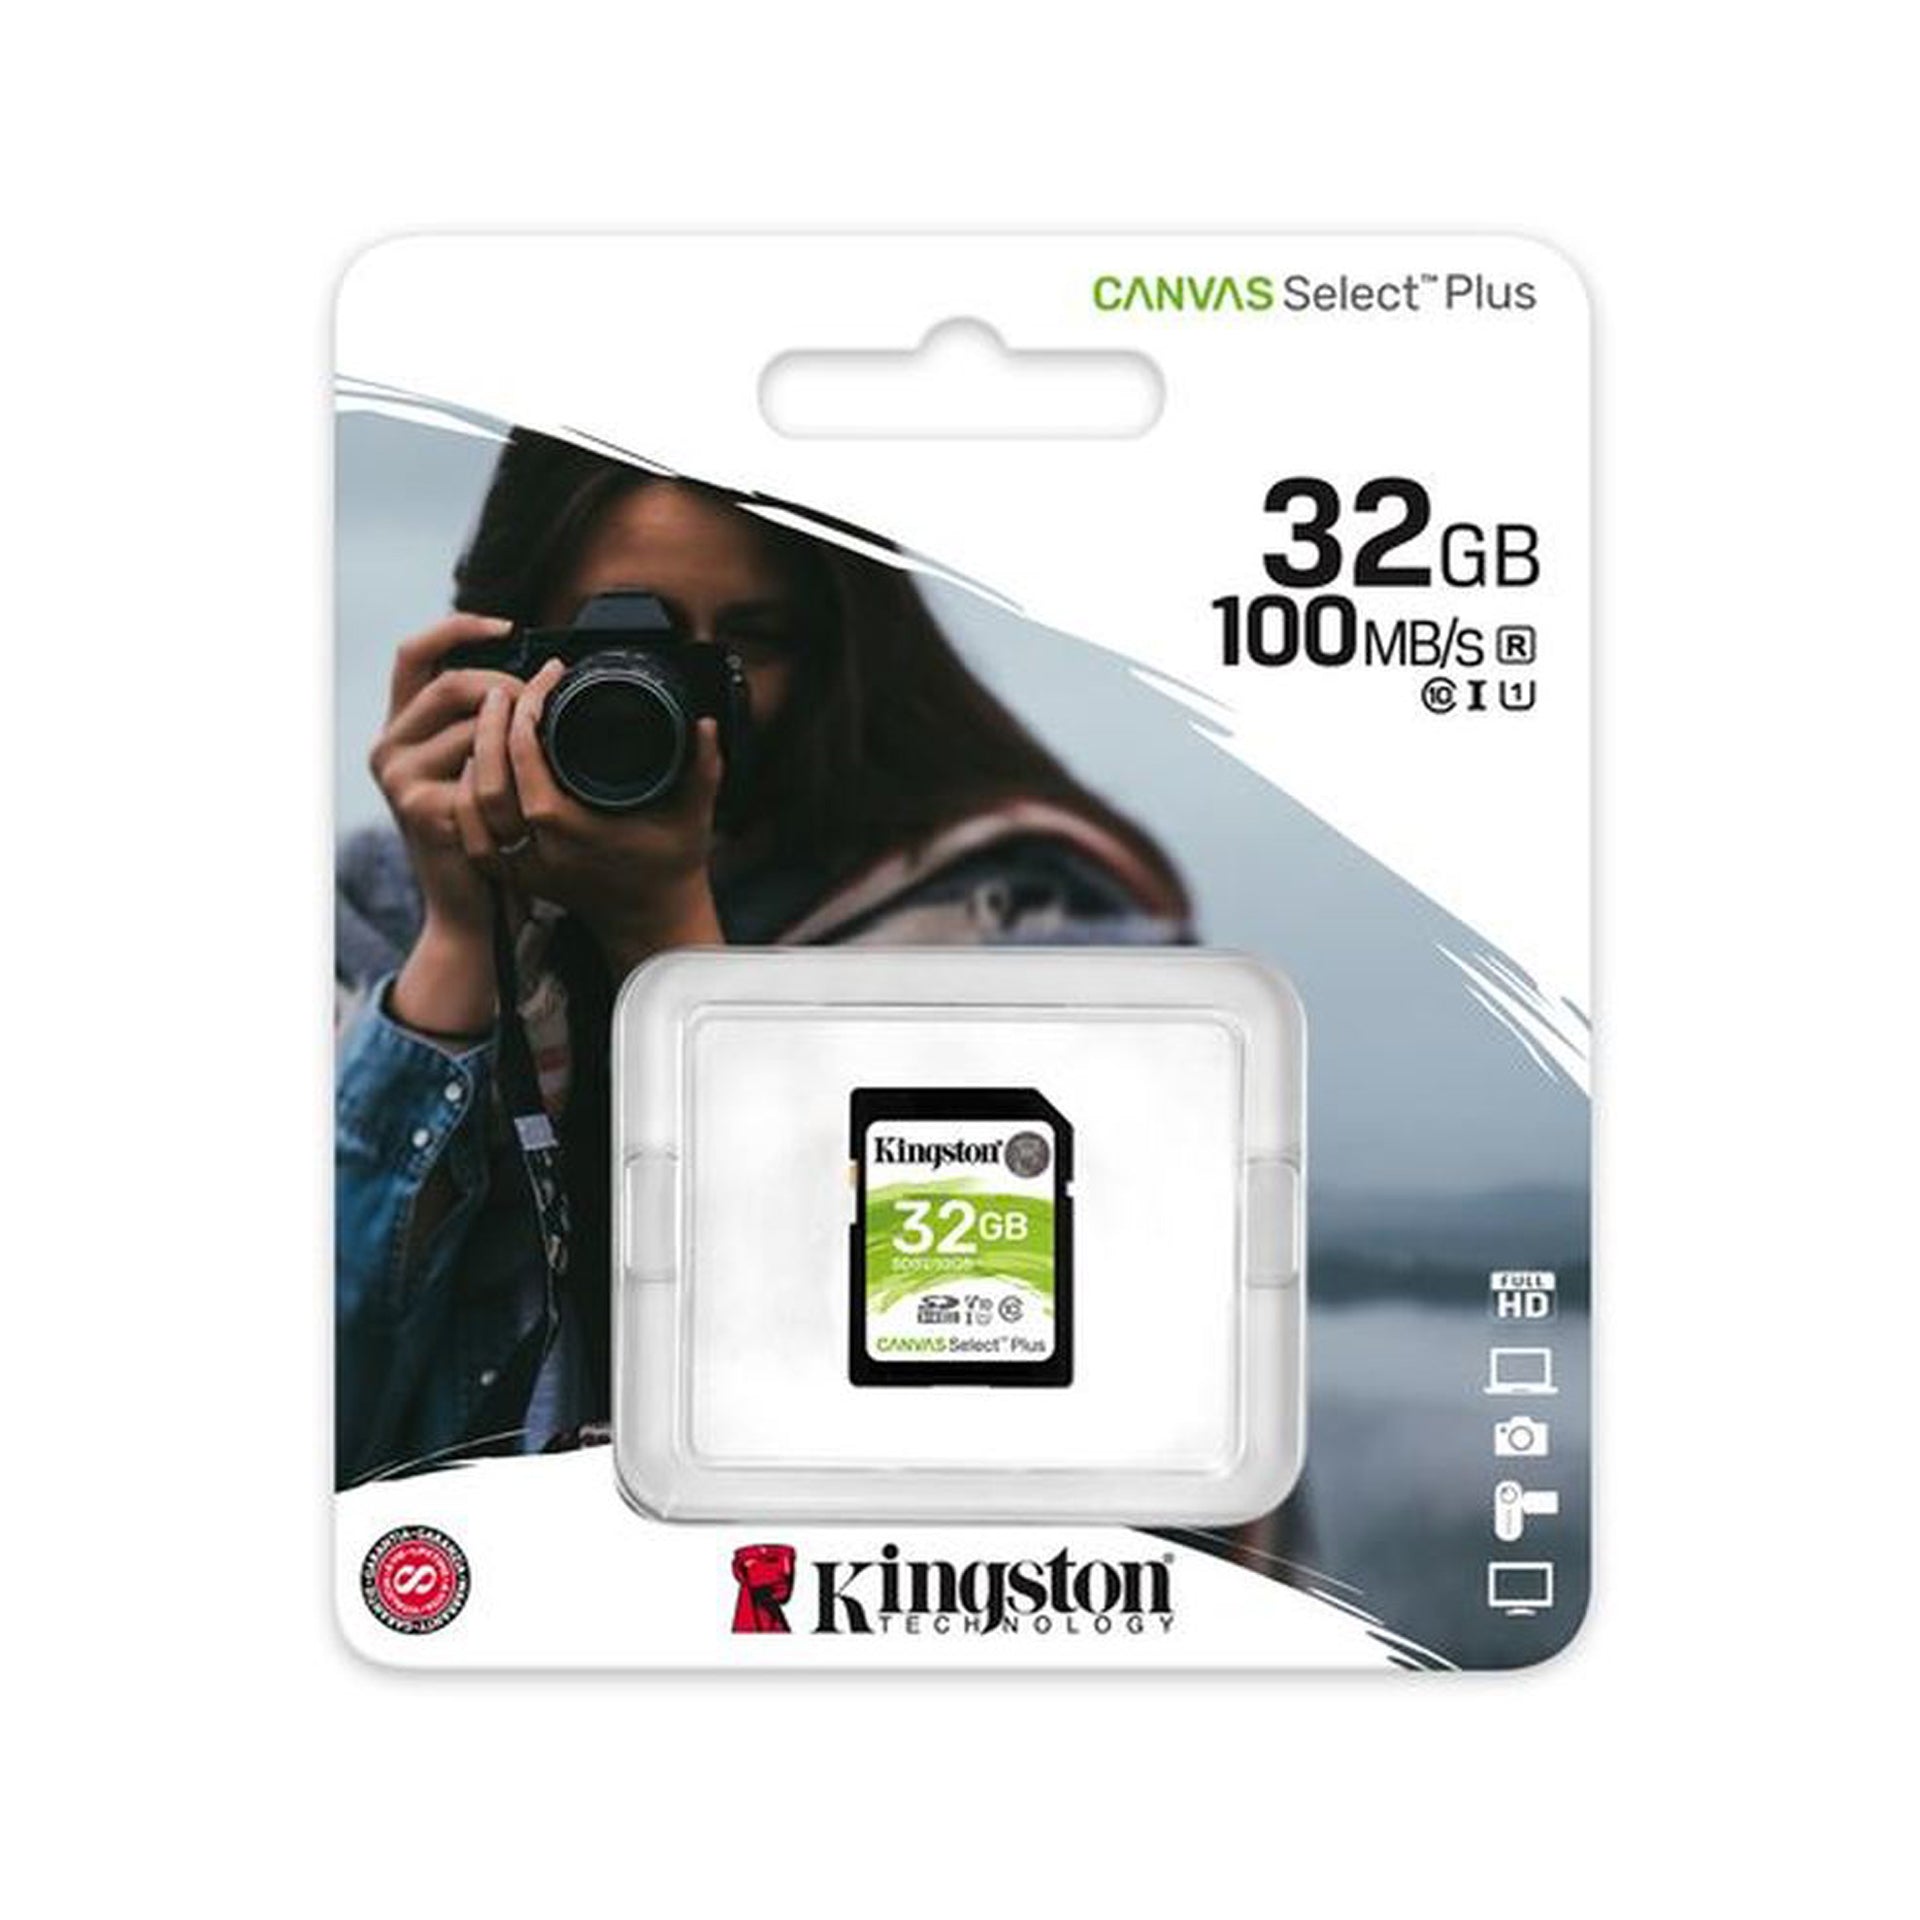 Kingston 32 GB SD Canvas Select Plus Class